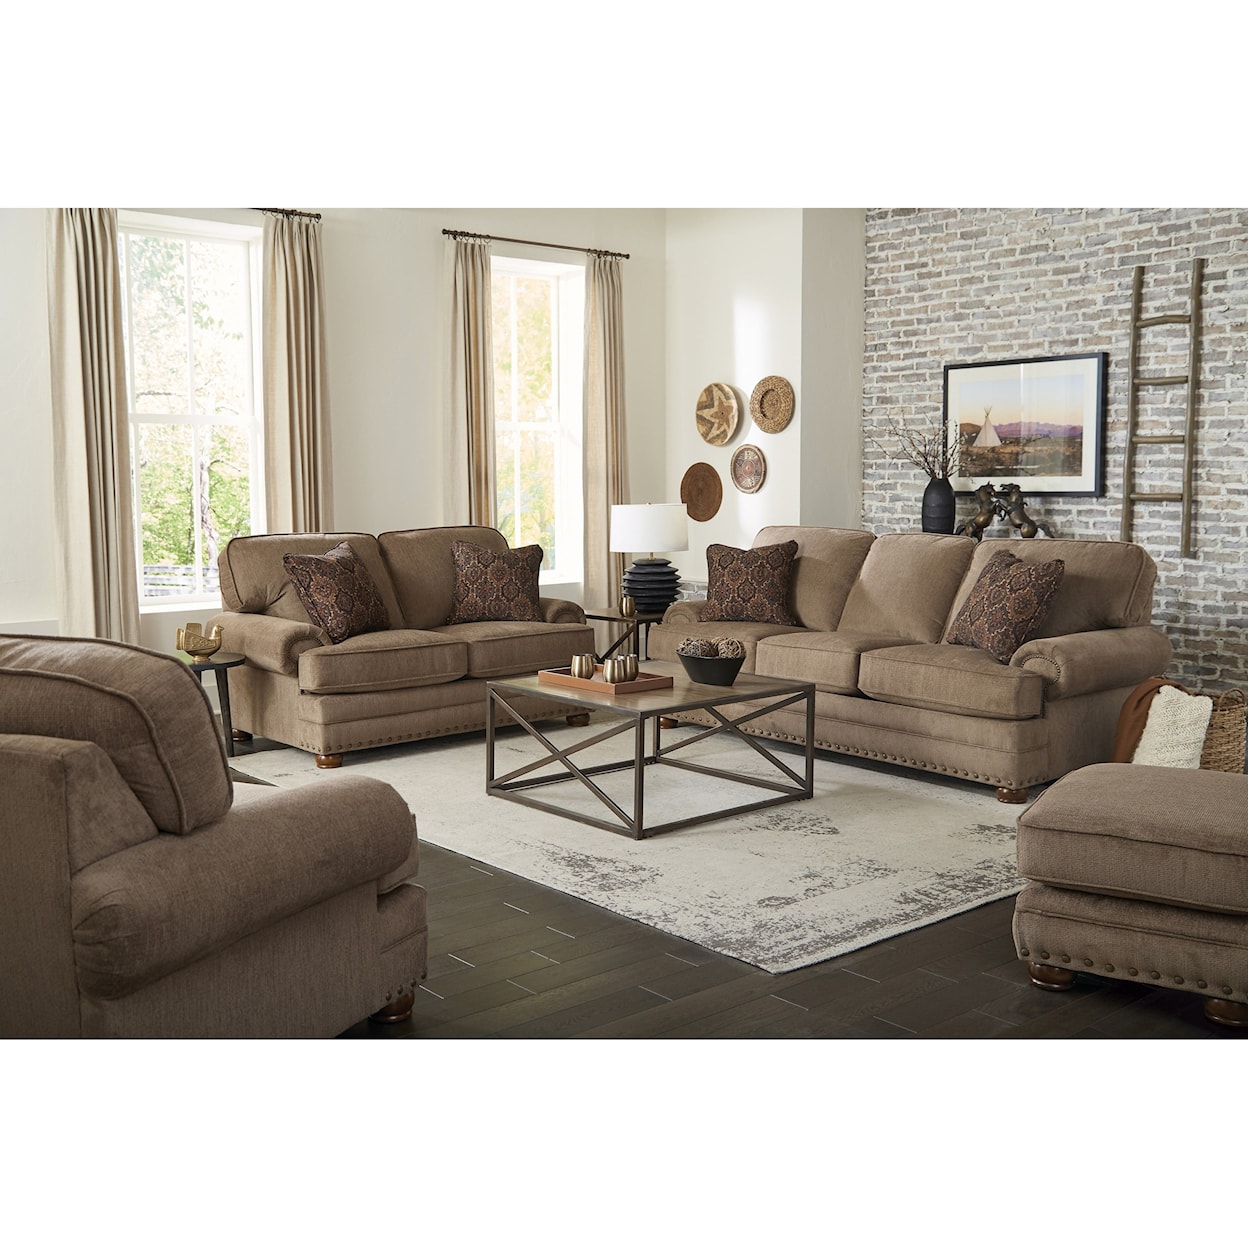 Jackson Furniture 3241 Singletary 4pc living room group